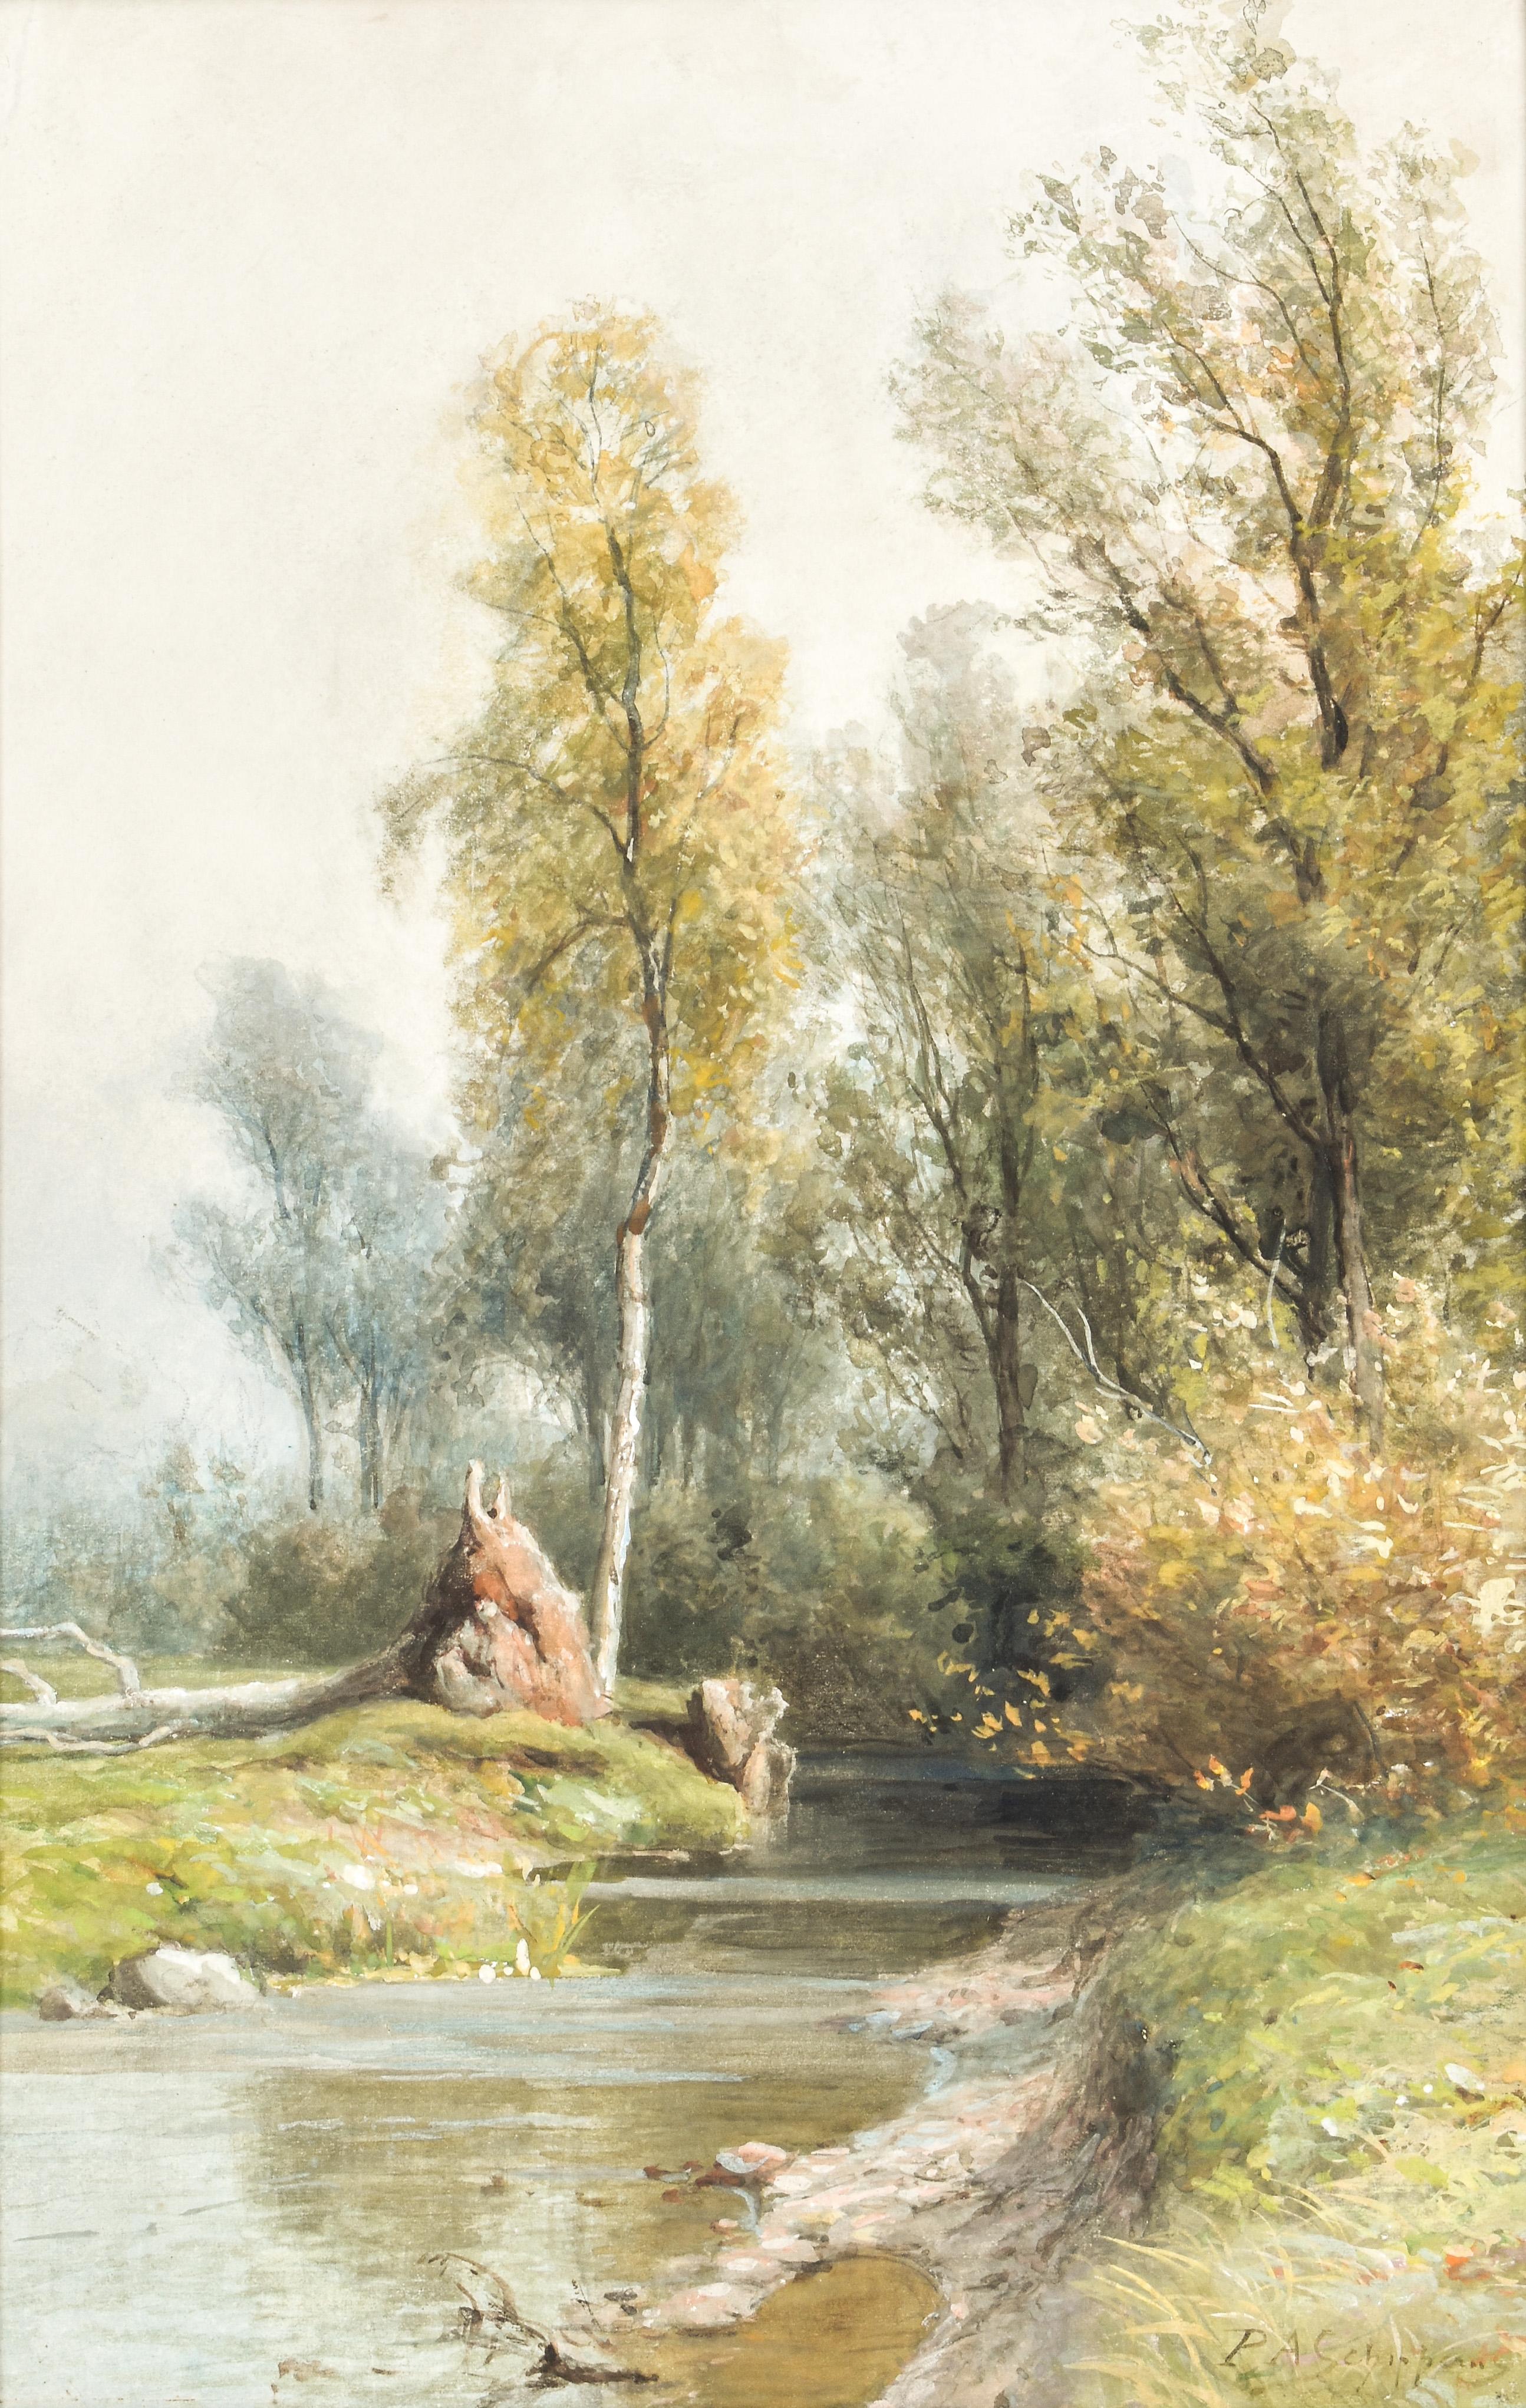 Pieter Adrianus Schipperus Landscape Art - Stream through the forest - Pieter Schipperus - Dutch - Landscape - Romantic